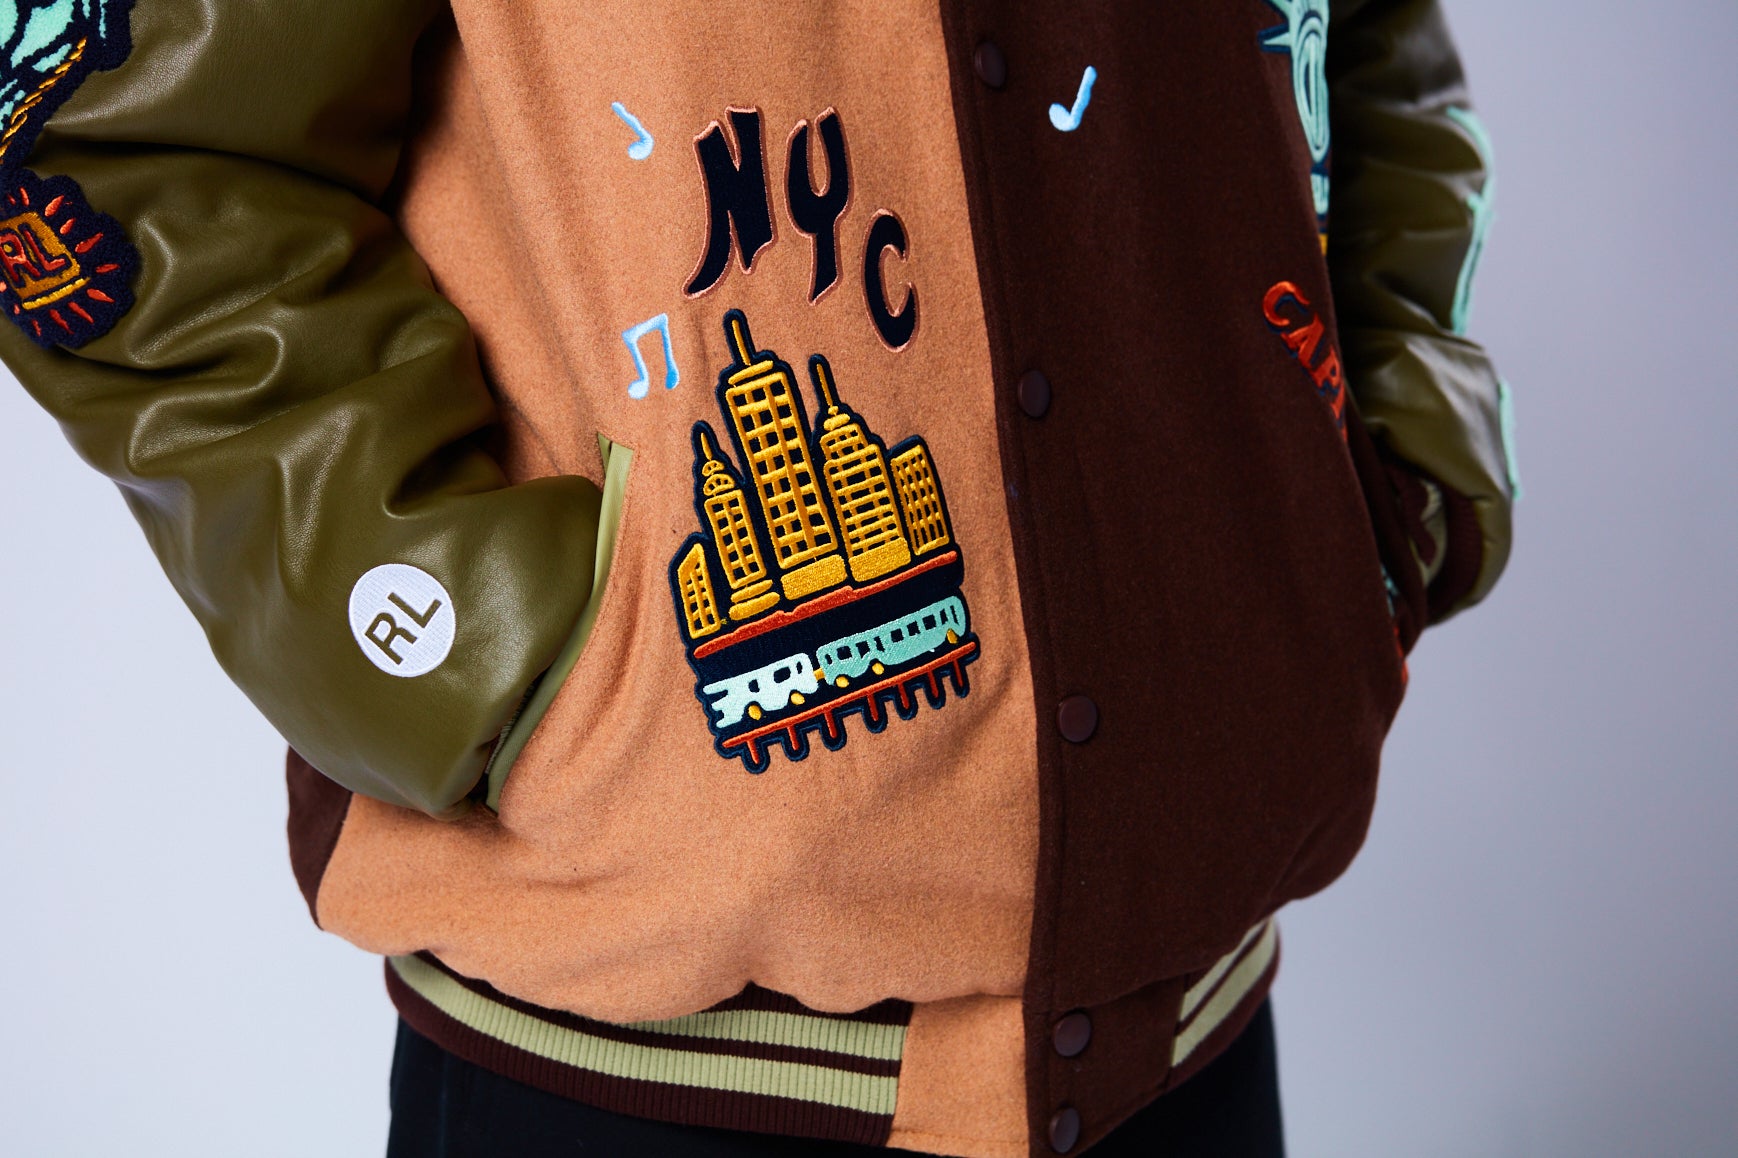 COTW NYC 2021 Letterman Jacket